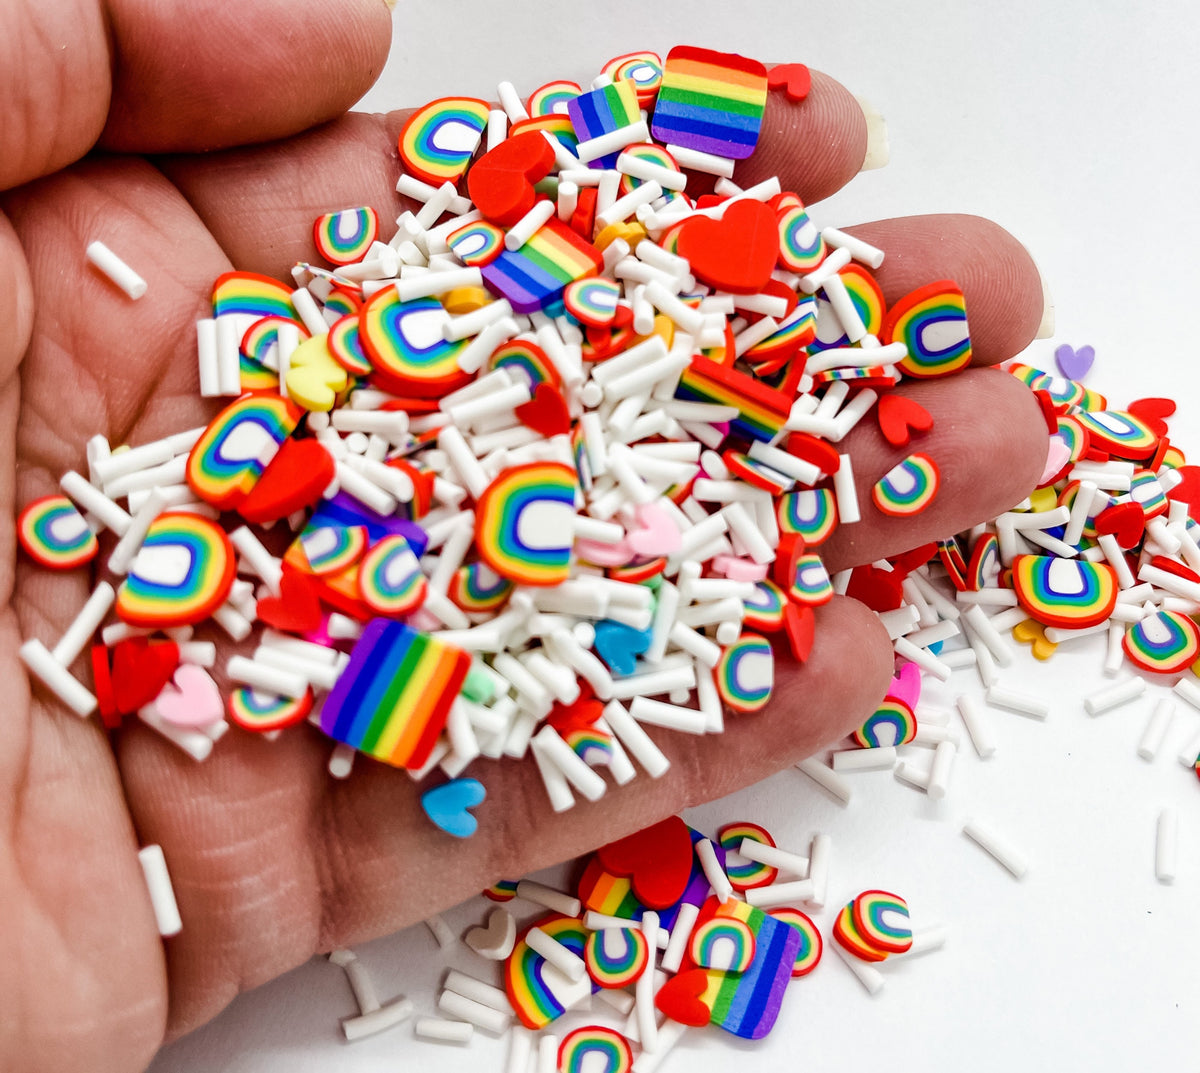  50g Vibrant Rainbow Fake Sprinkles Clay Sprinkle for